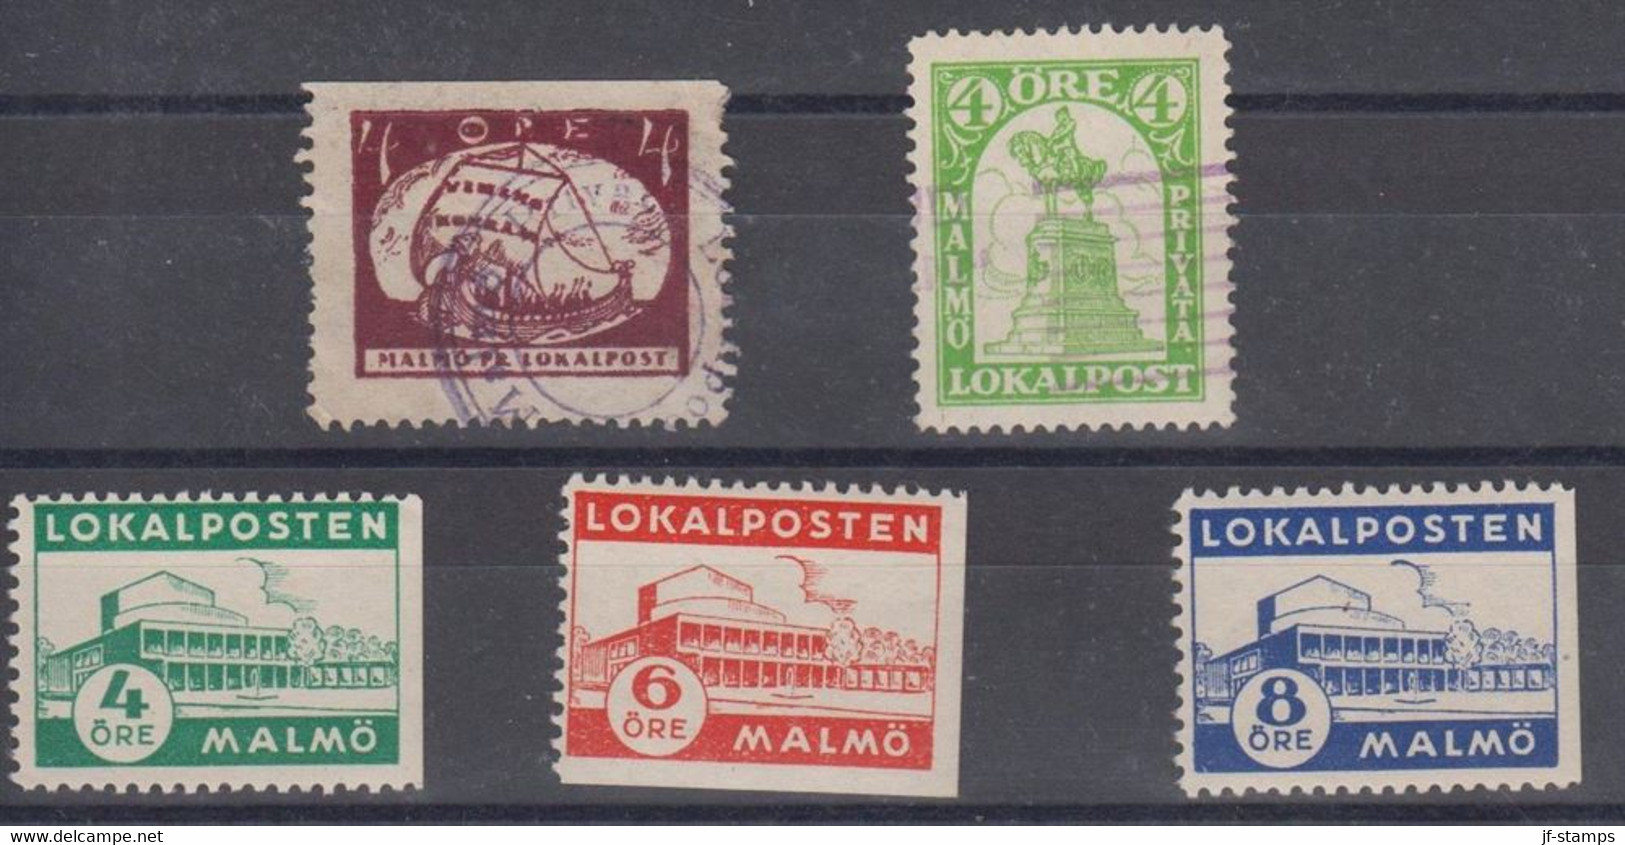 1926-1945. SVERIGE. MALMÖ LOKALPOST 2 Cancelled Stamps And LOKALPOSTEN MALMÖ 3 Never Hinged Stamps.  - JF520097 - Ortsausgaben